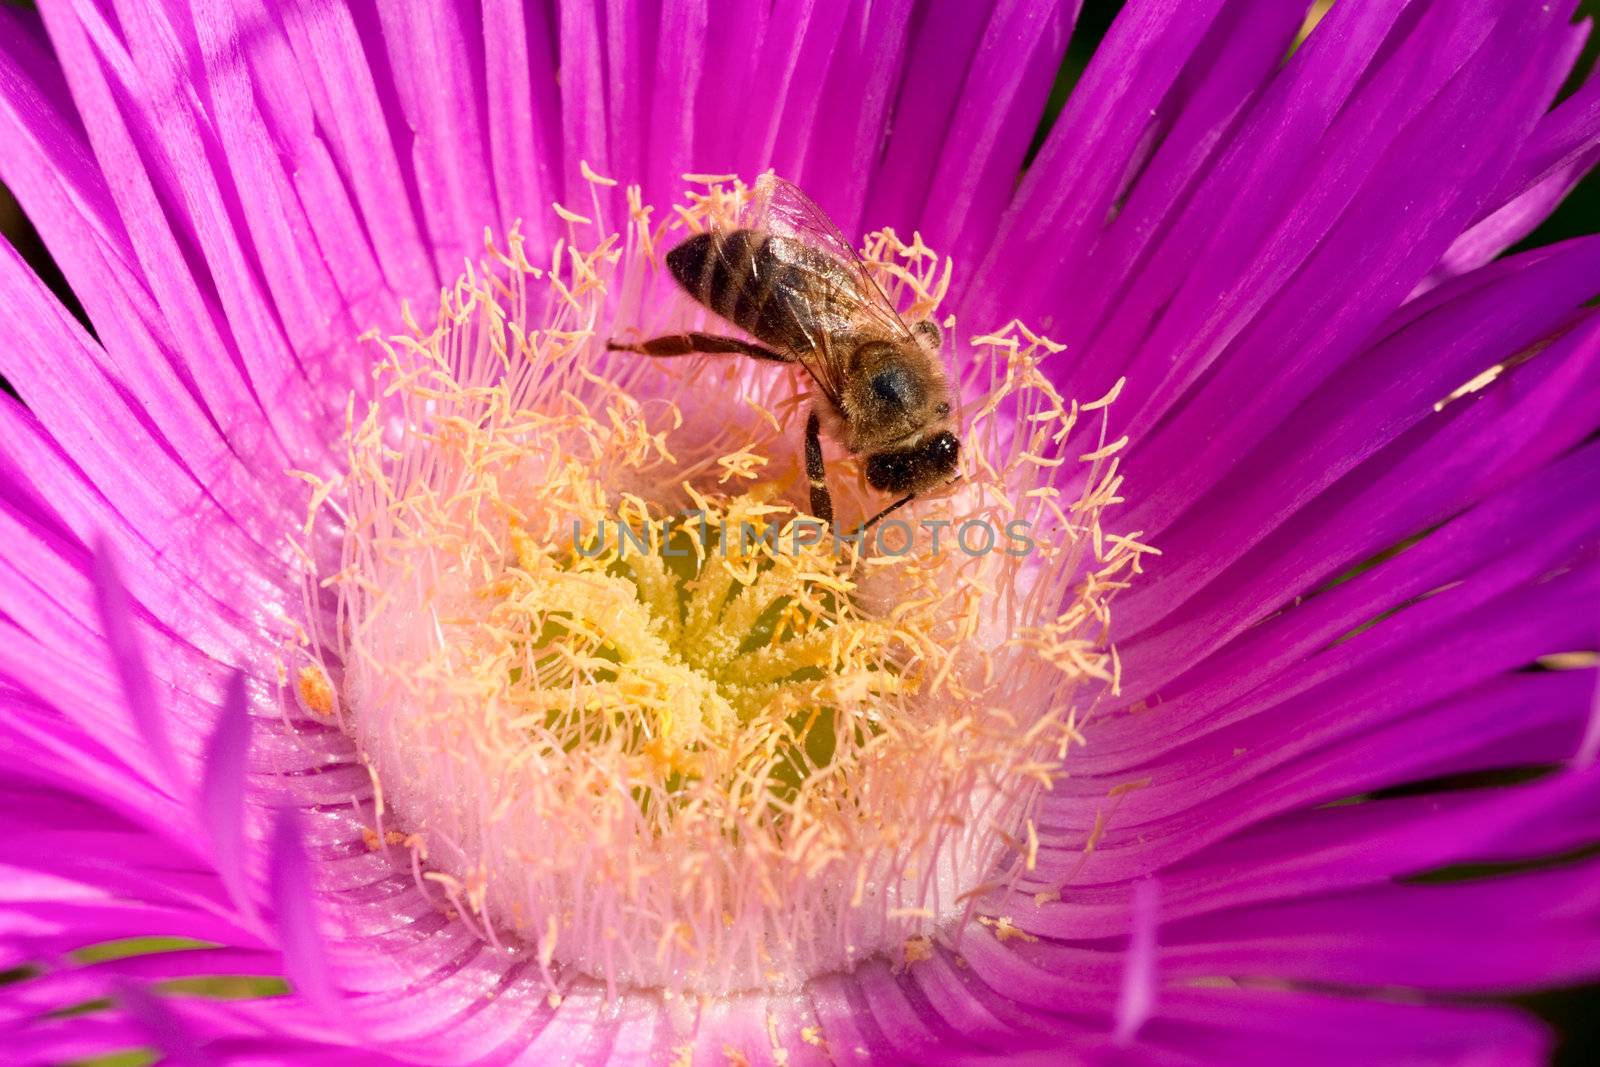 Honey bee collecting pollen from purple flower